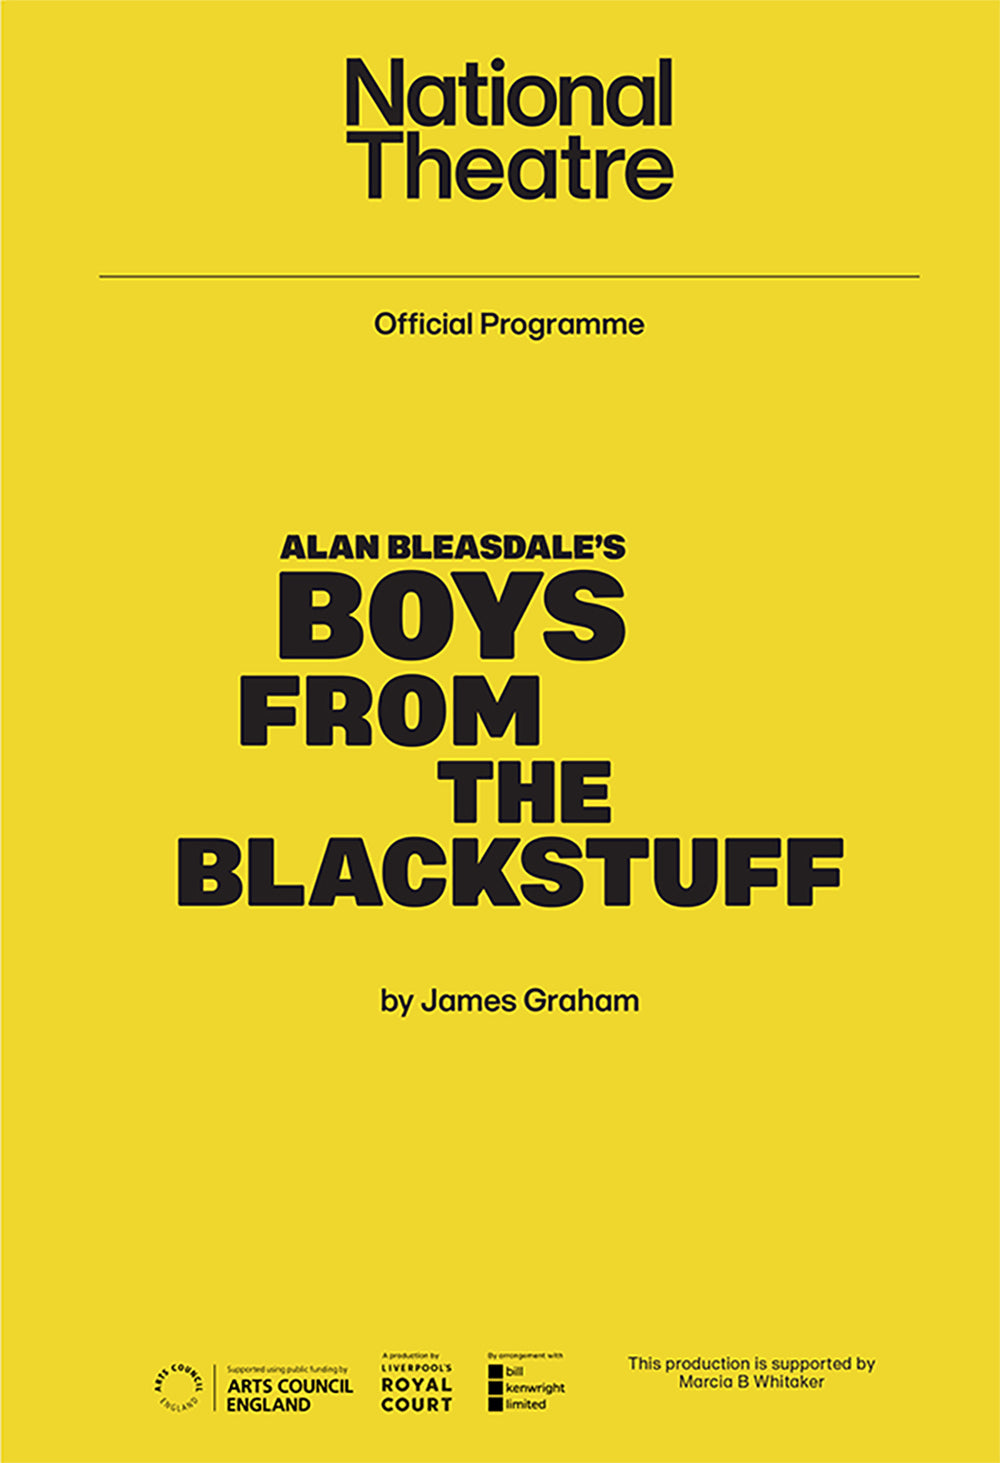 Boys from the Blackstuff Programme